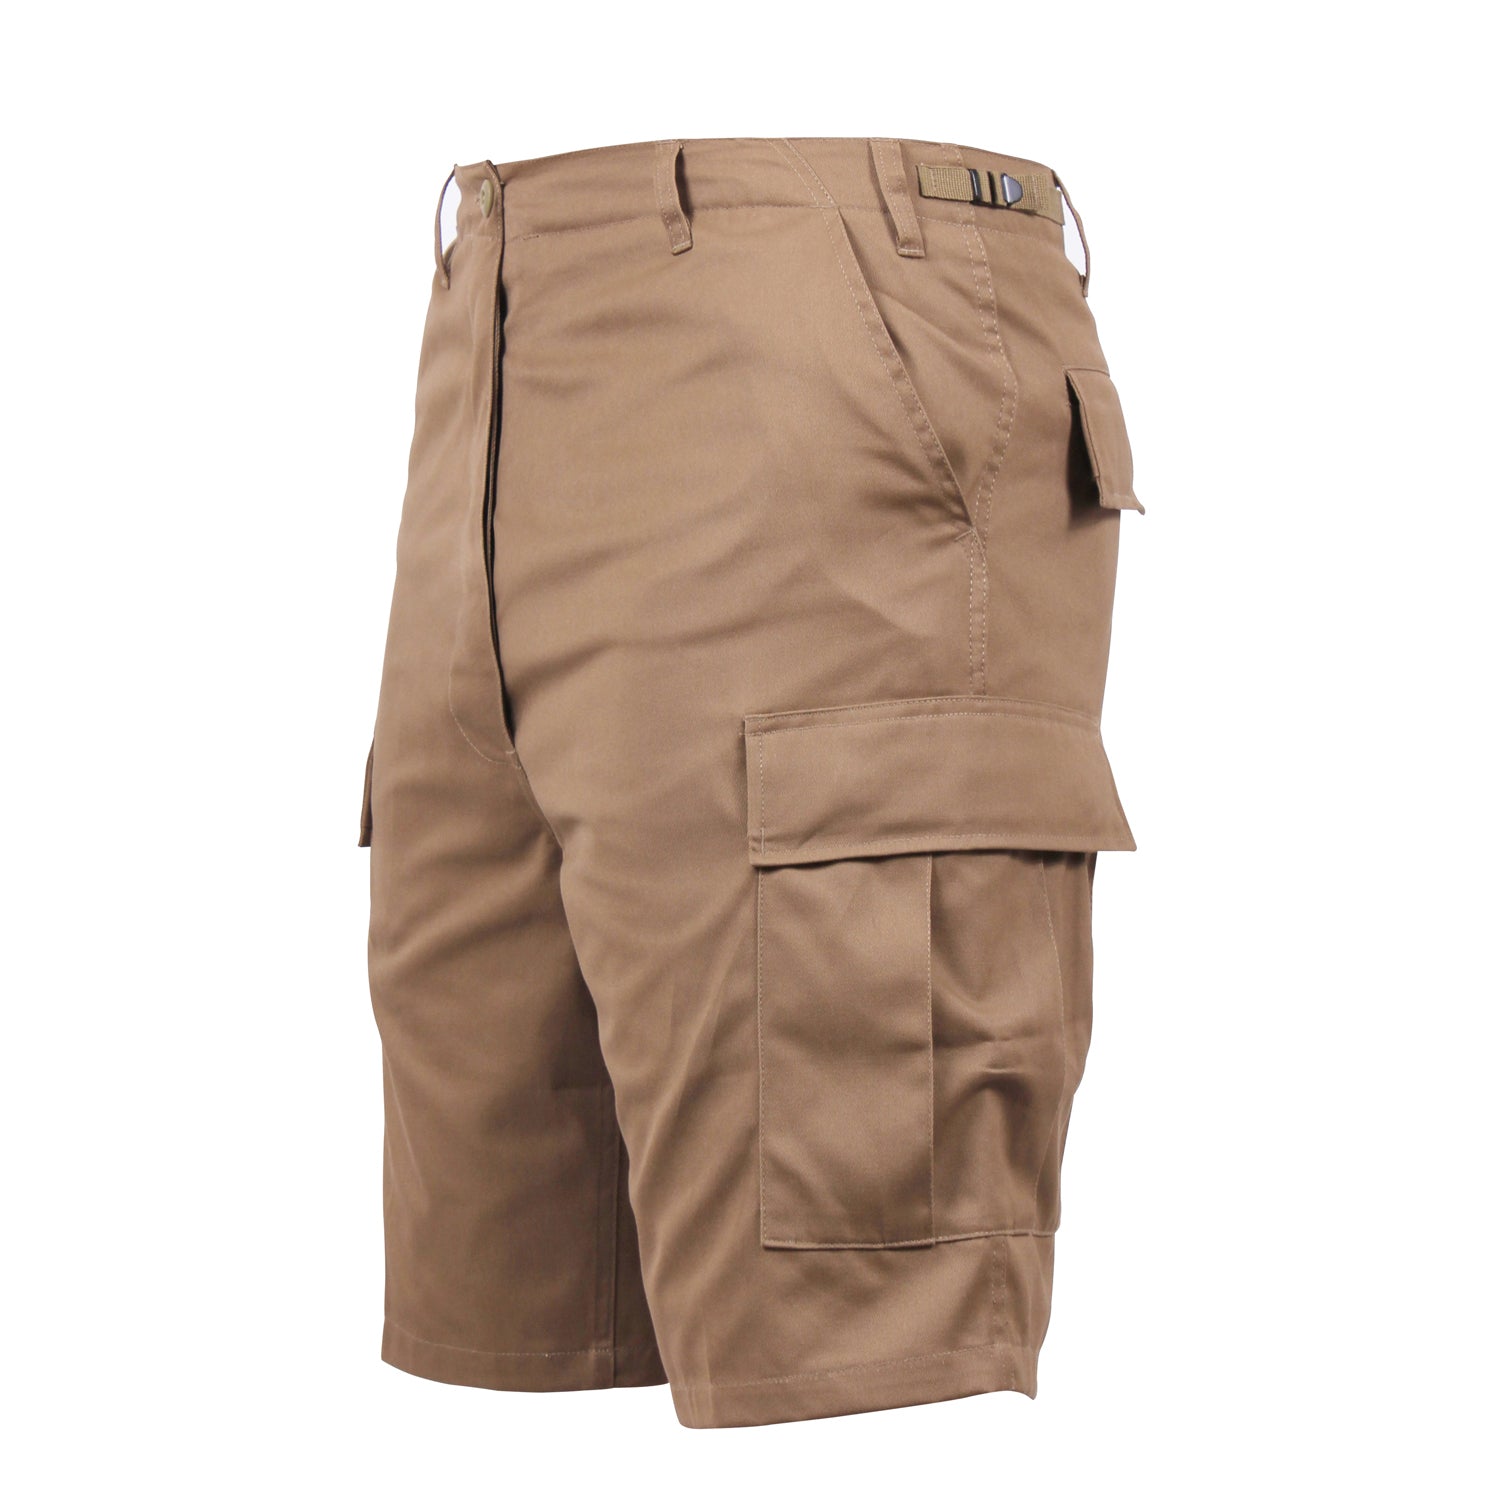 Rothco BDU Cargo Shorts Coyote Brown (66212)